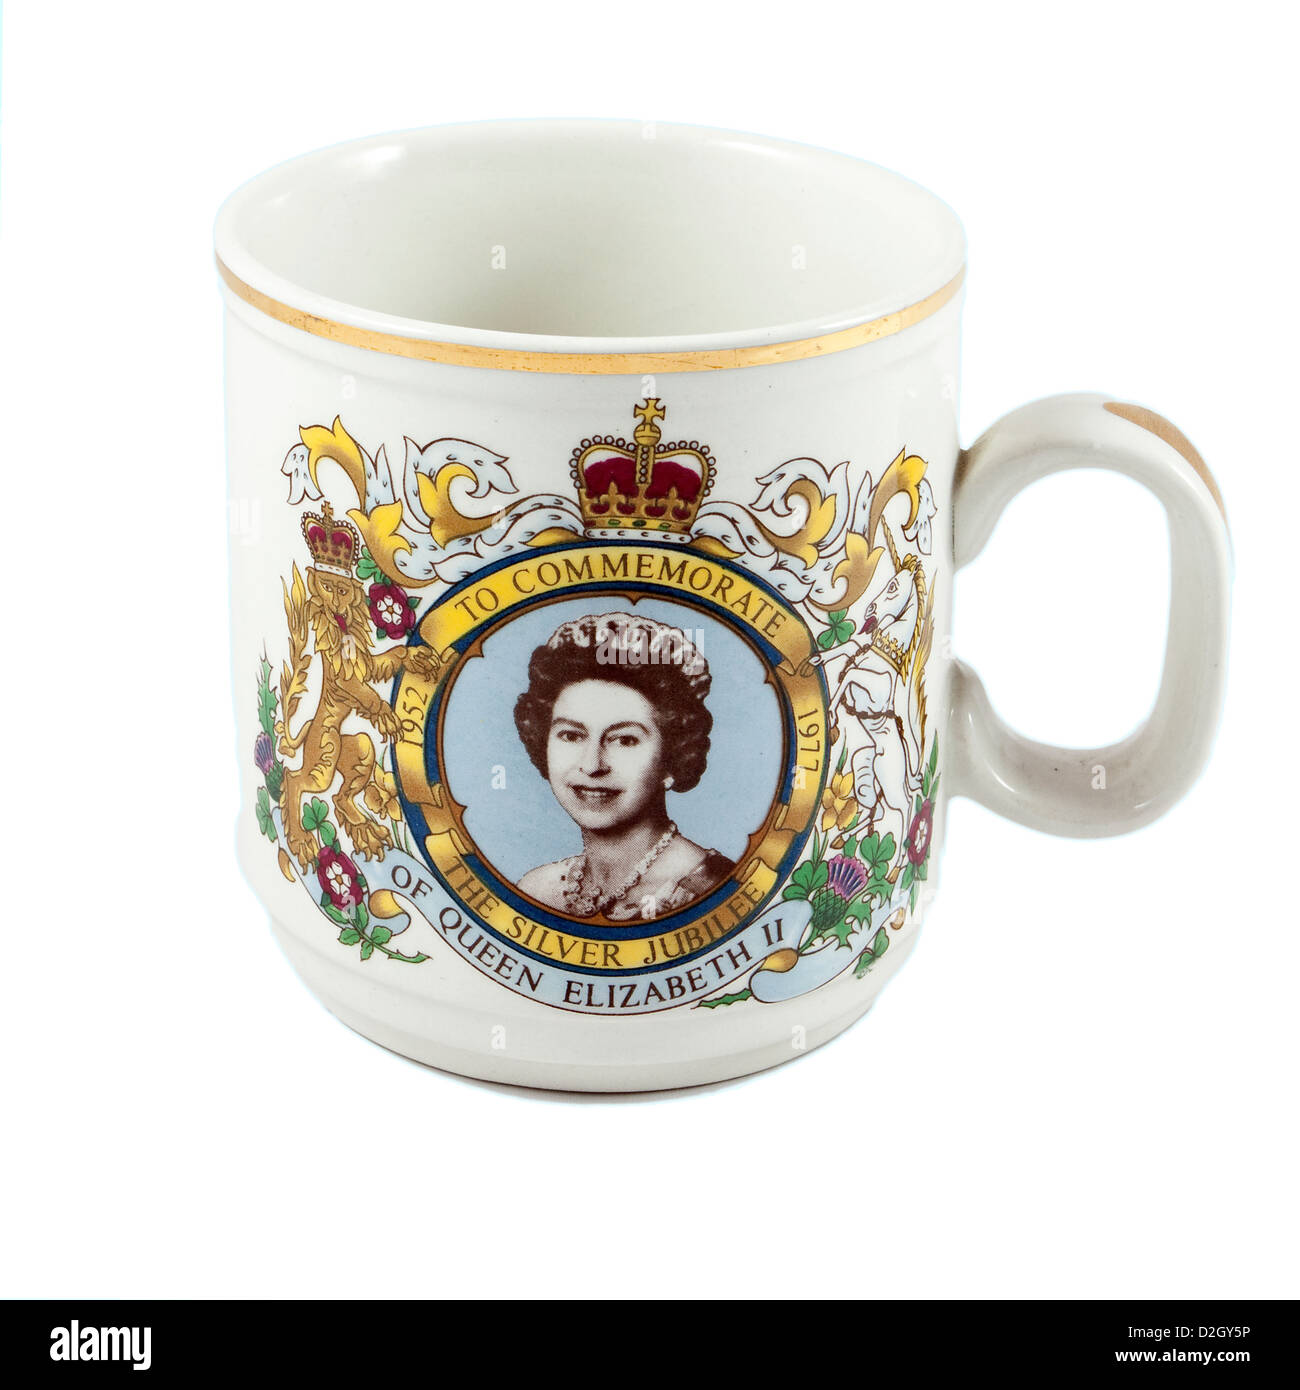 Silver jubilee 1977 Commemorative mug Elizabeth II.